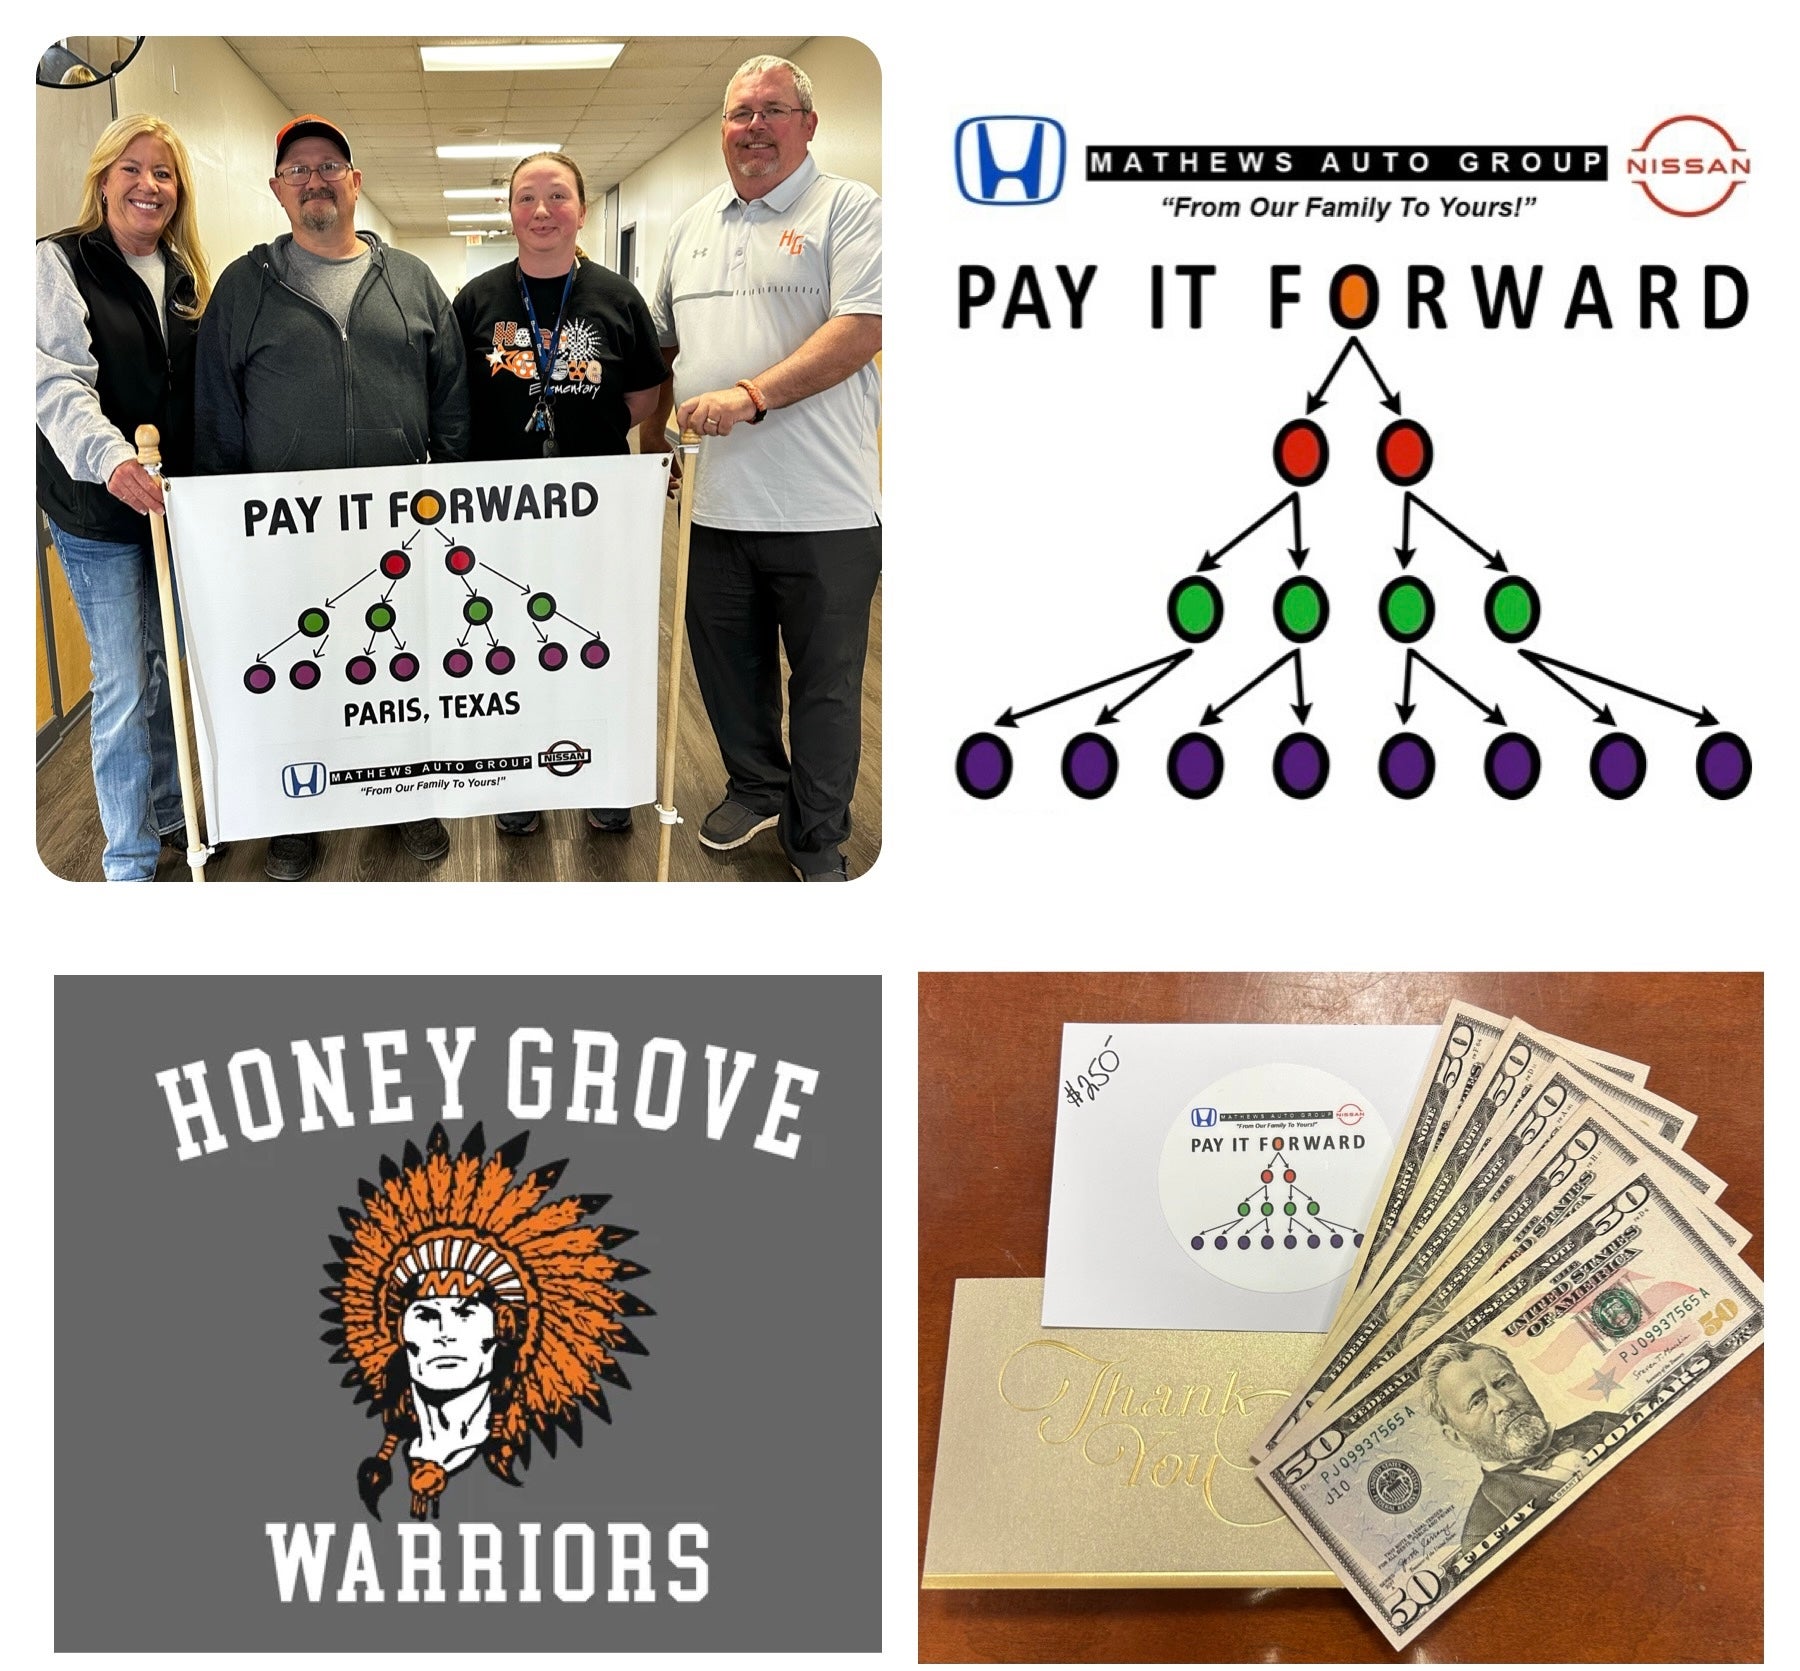 pays it forward to Honey Grove ISD